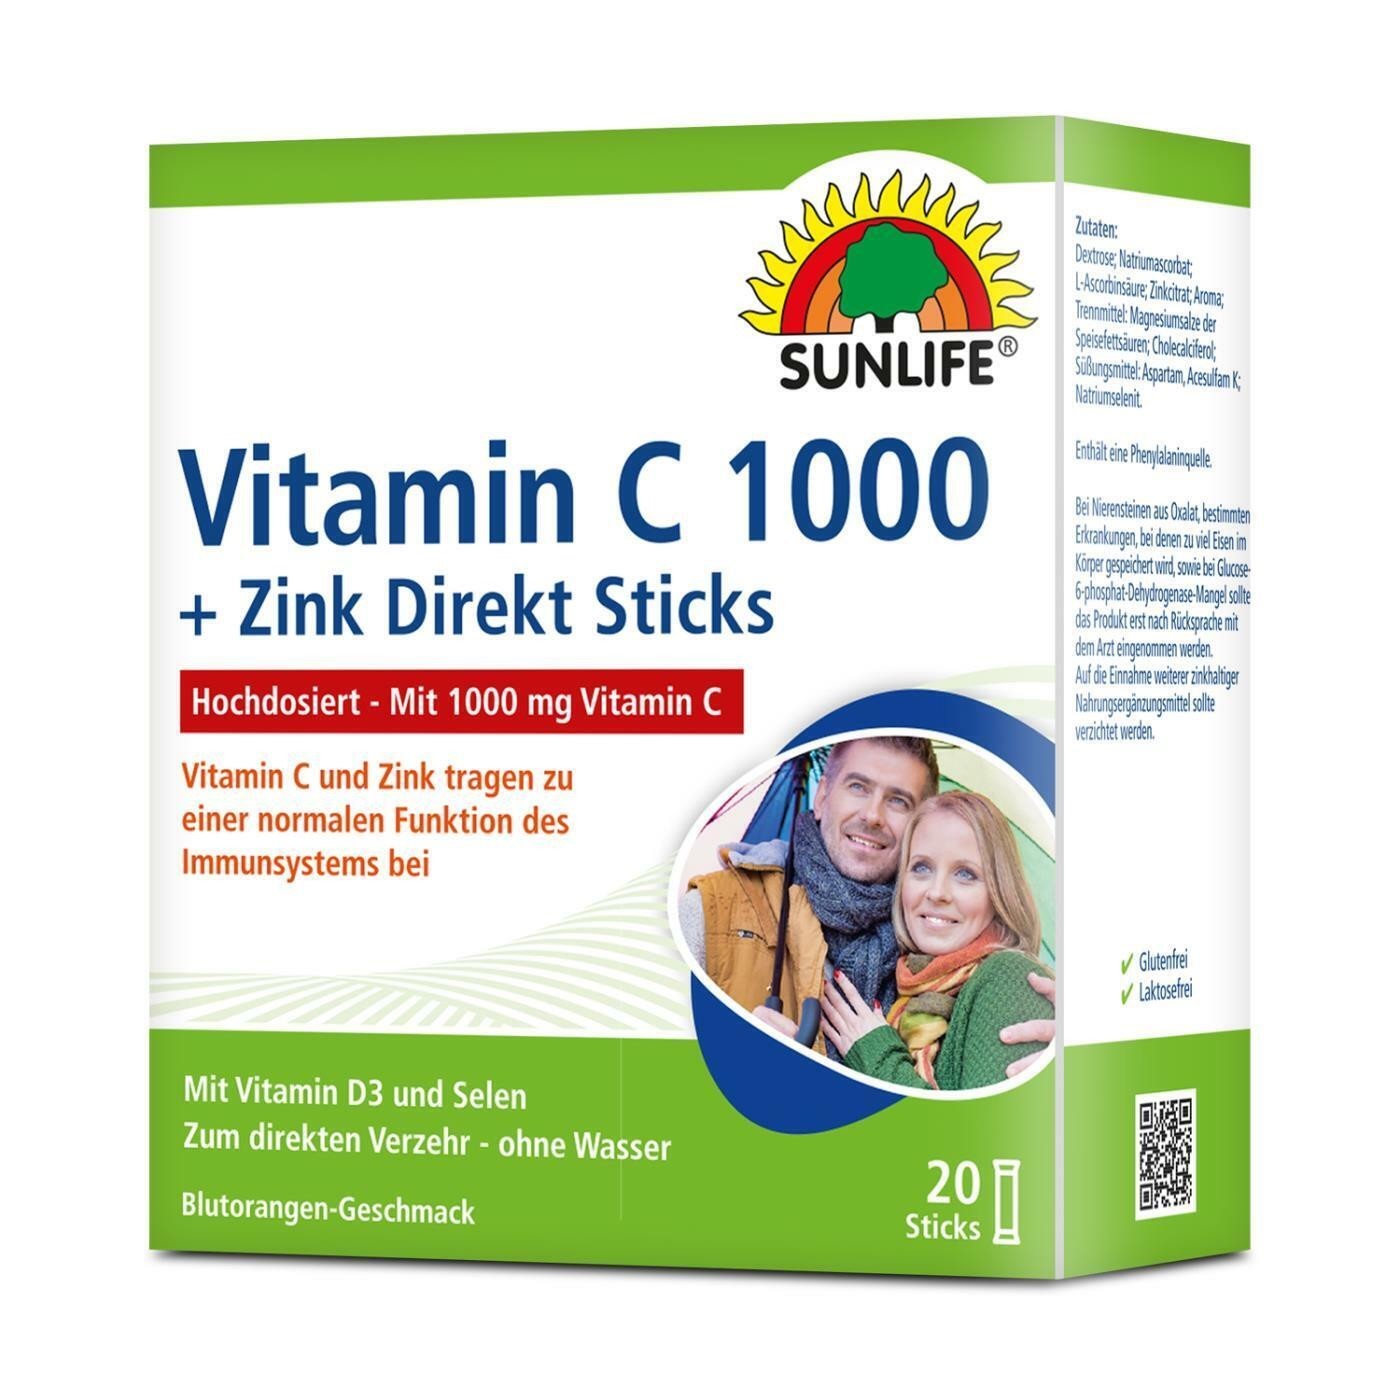 Sunlife Vitamin C 1000 + Zink Direkt Sticks